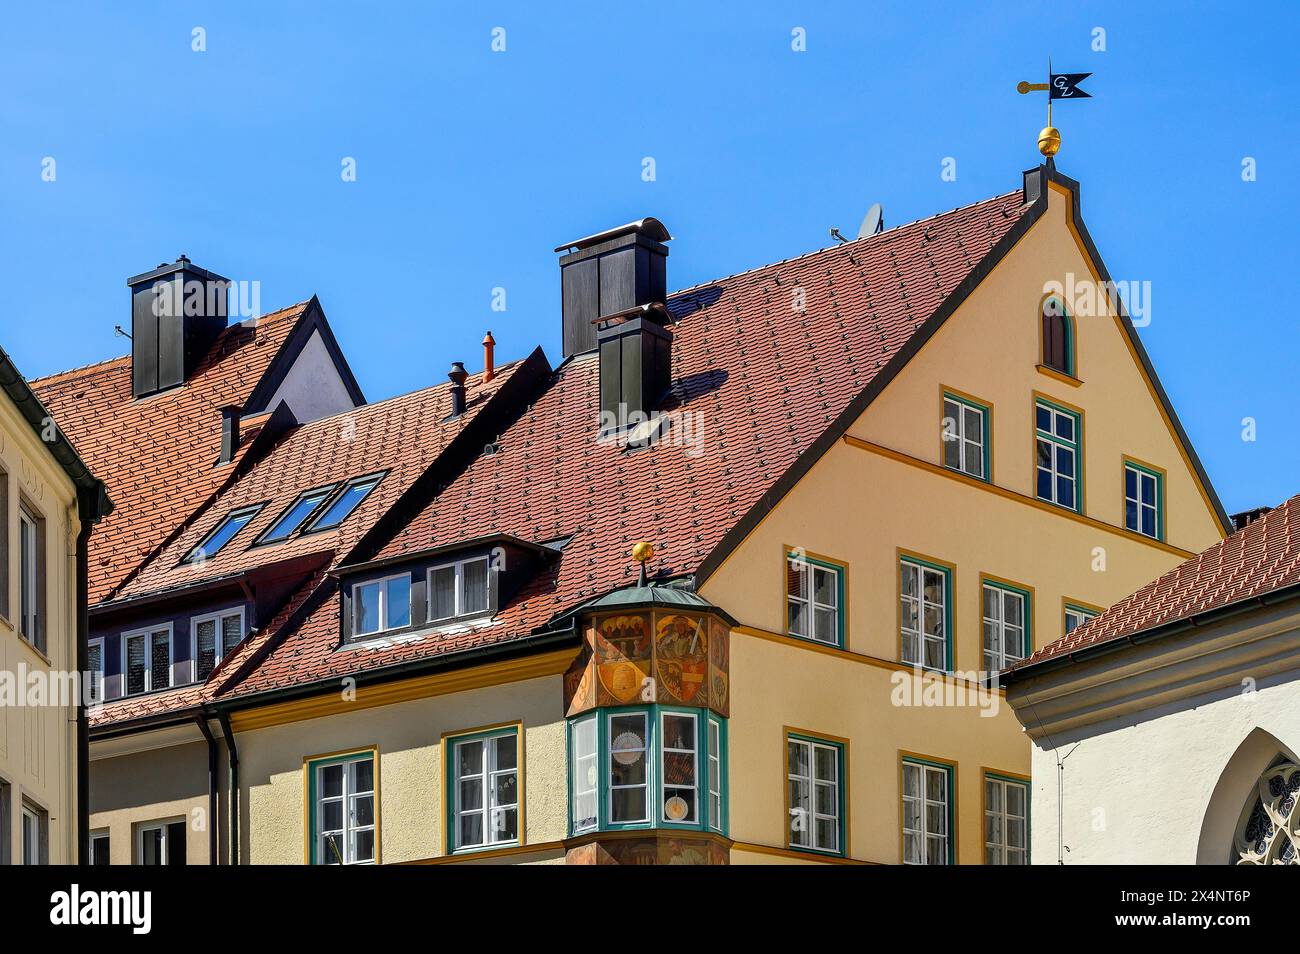 Casa a spillo con camini, dormitori e finestre a bovindo, Kaufbeuern, Allgaeu, Svevia, Baviera, Germania Foto Stock